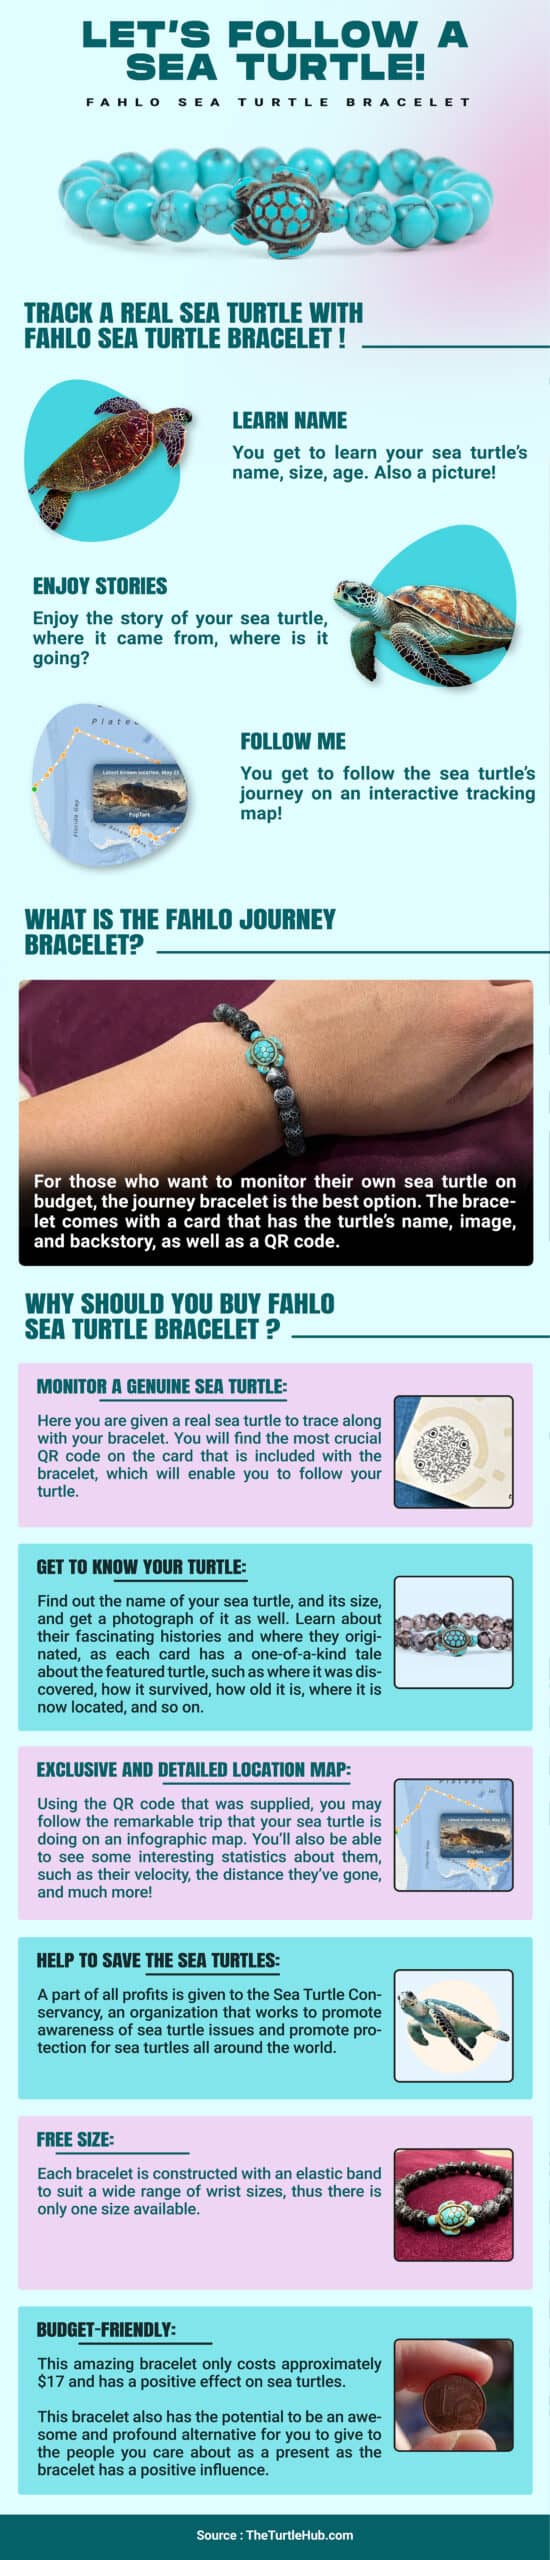 sea turtle tracking bracelet infographic